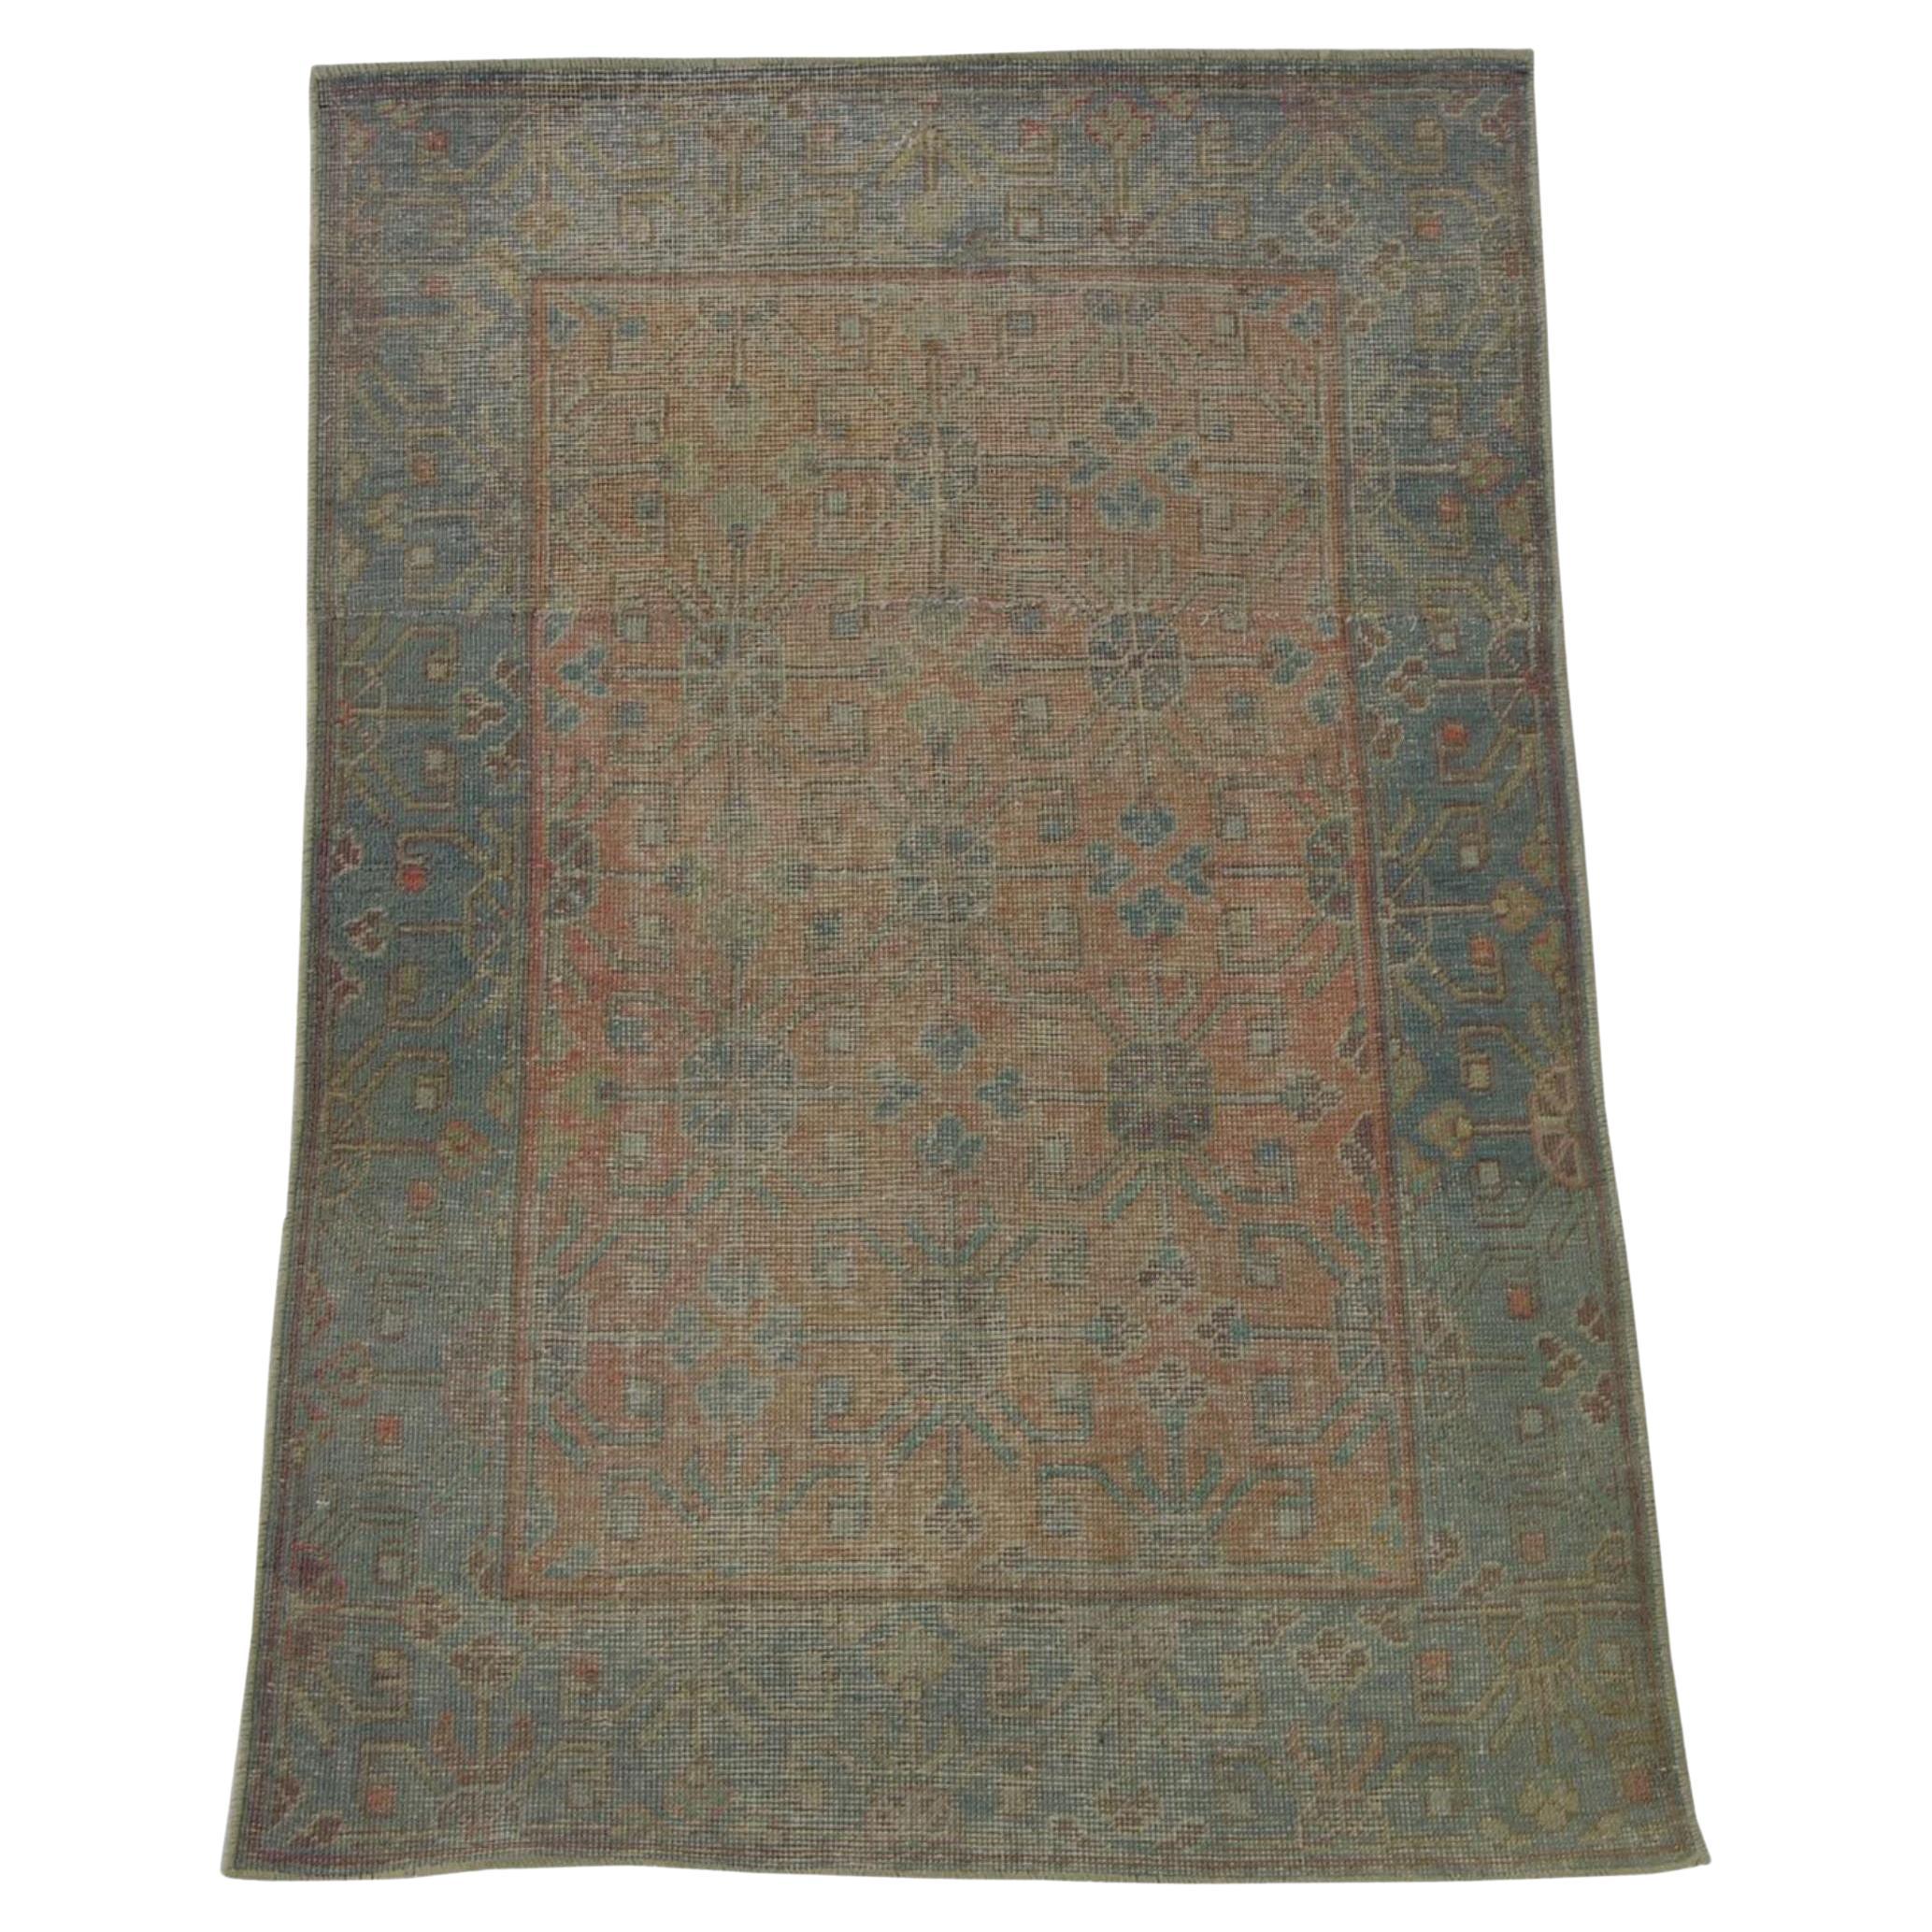 1900s Antike dekorative Samarkand Teppich-4'2" X 2'7"